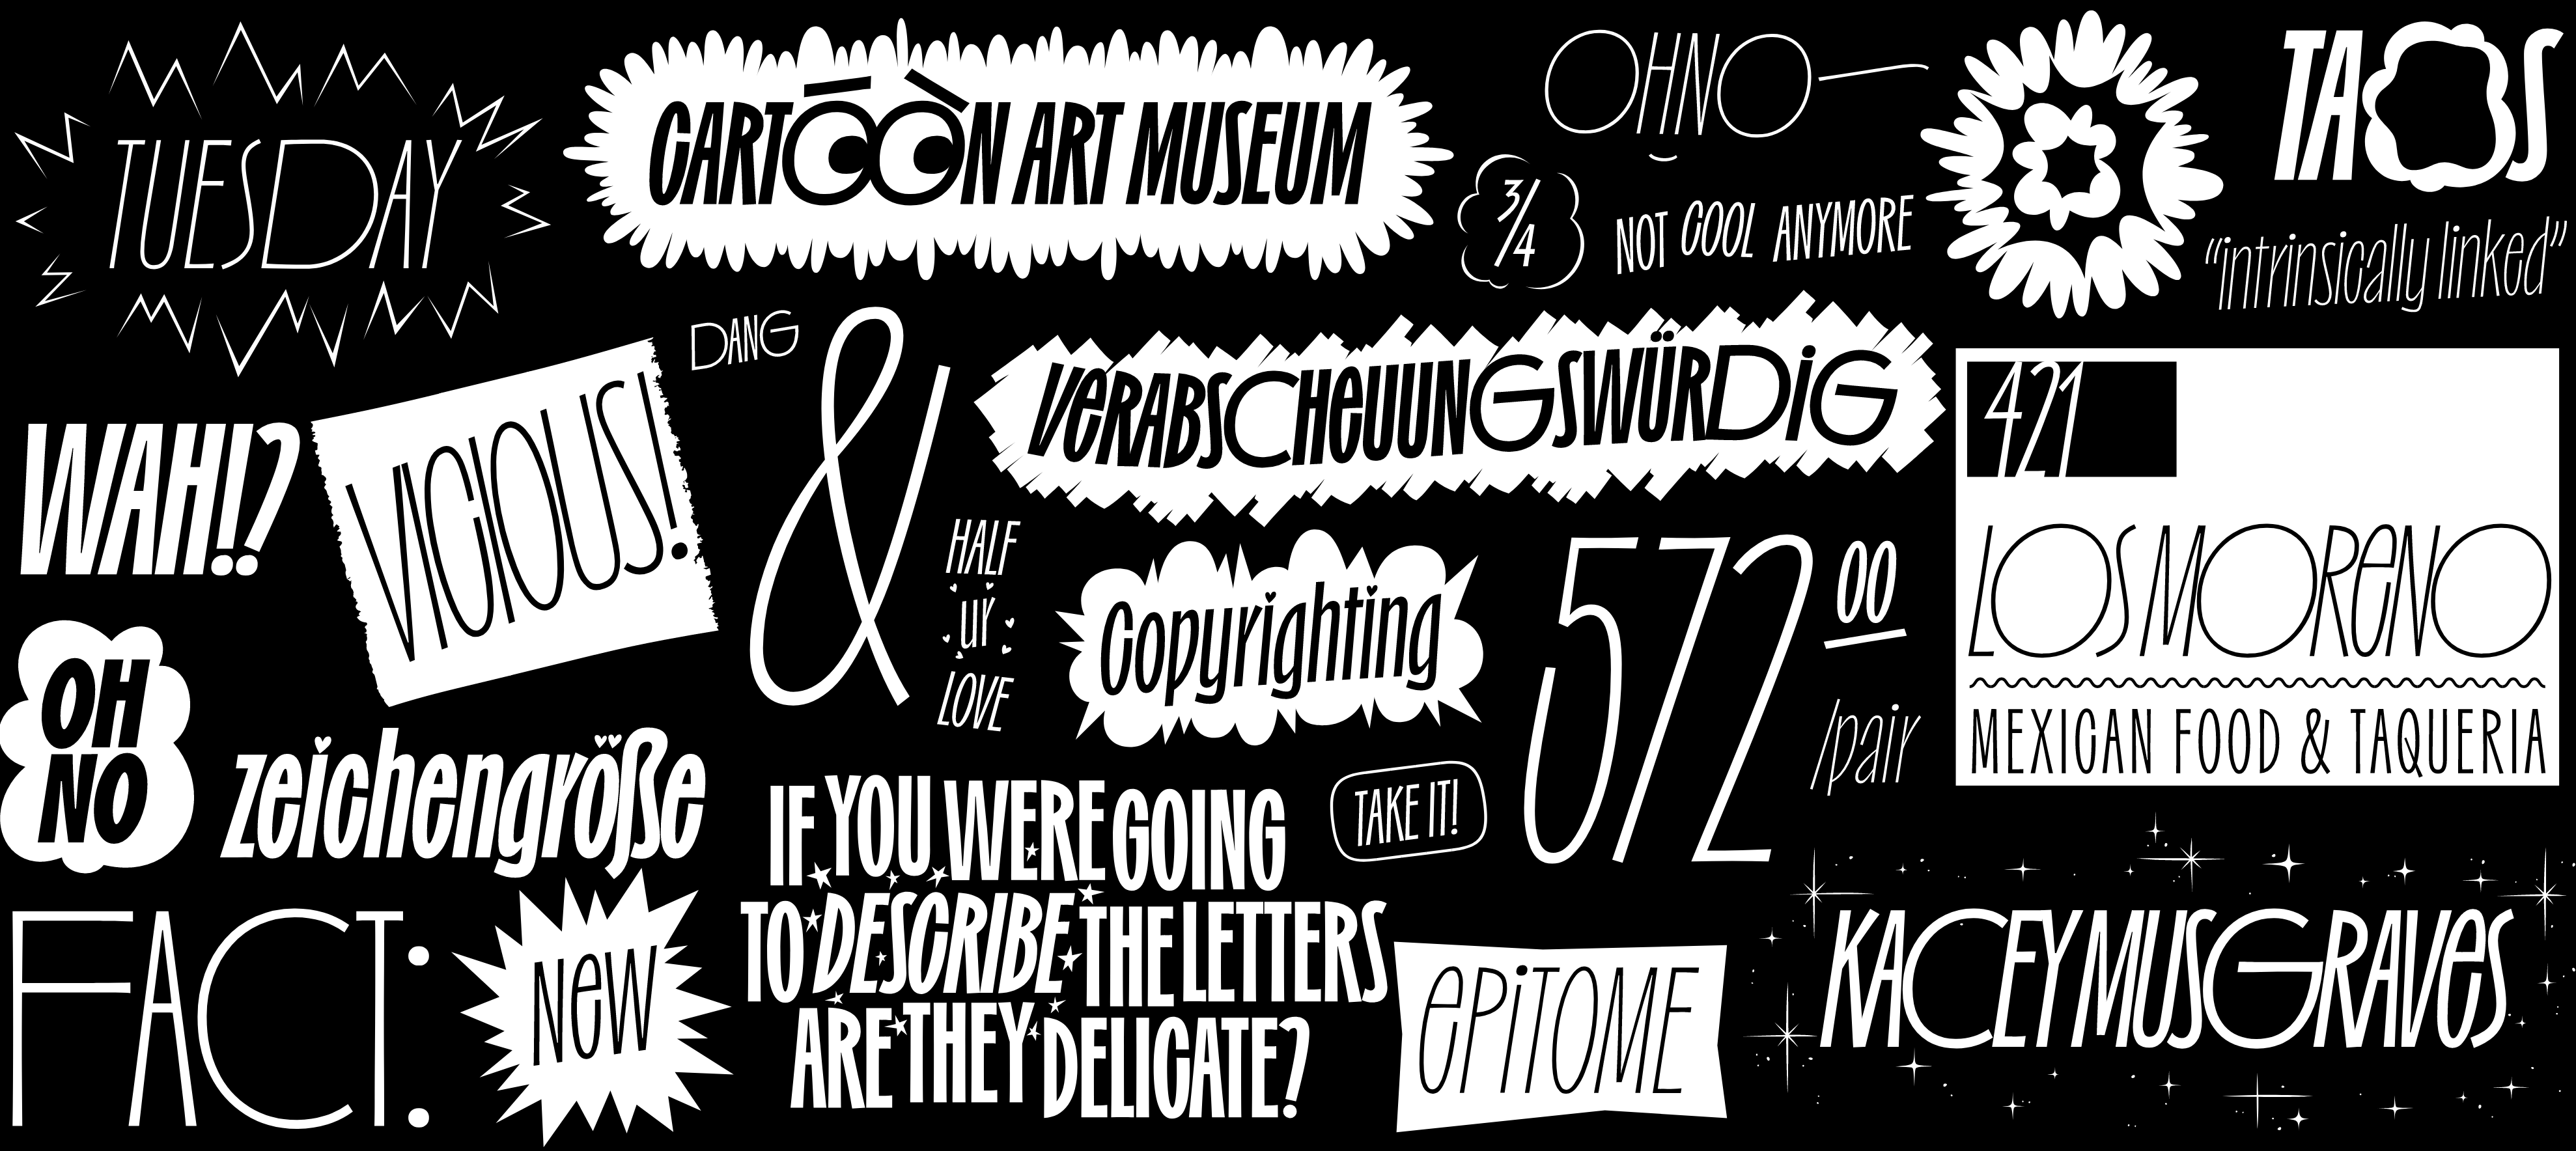 TypEx I font - from experimental font family by Ochakov